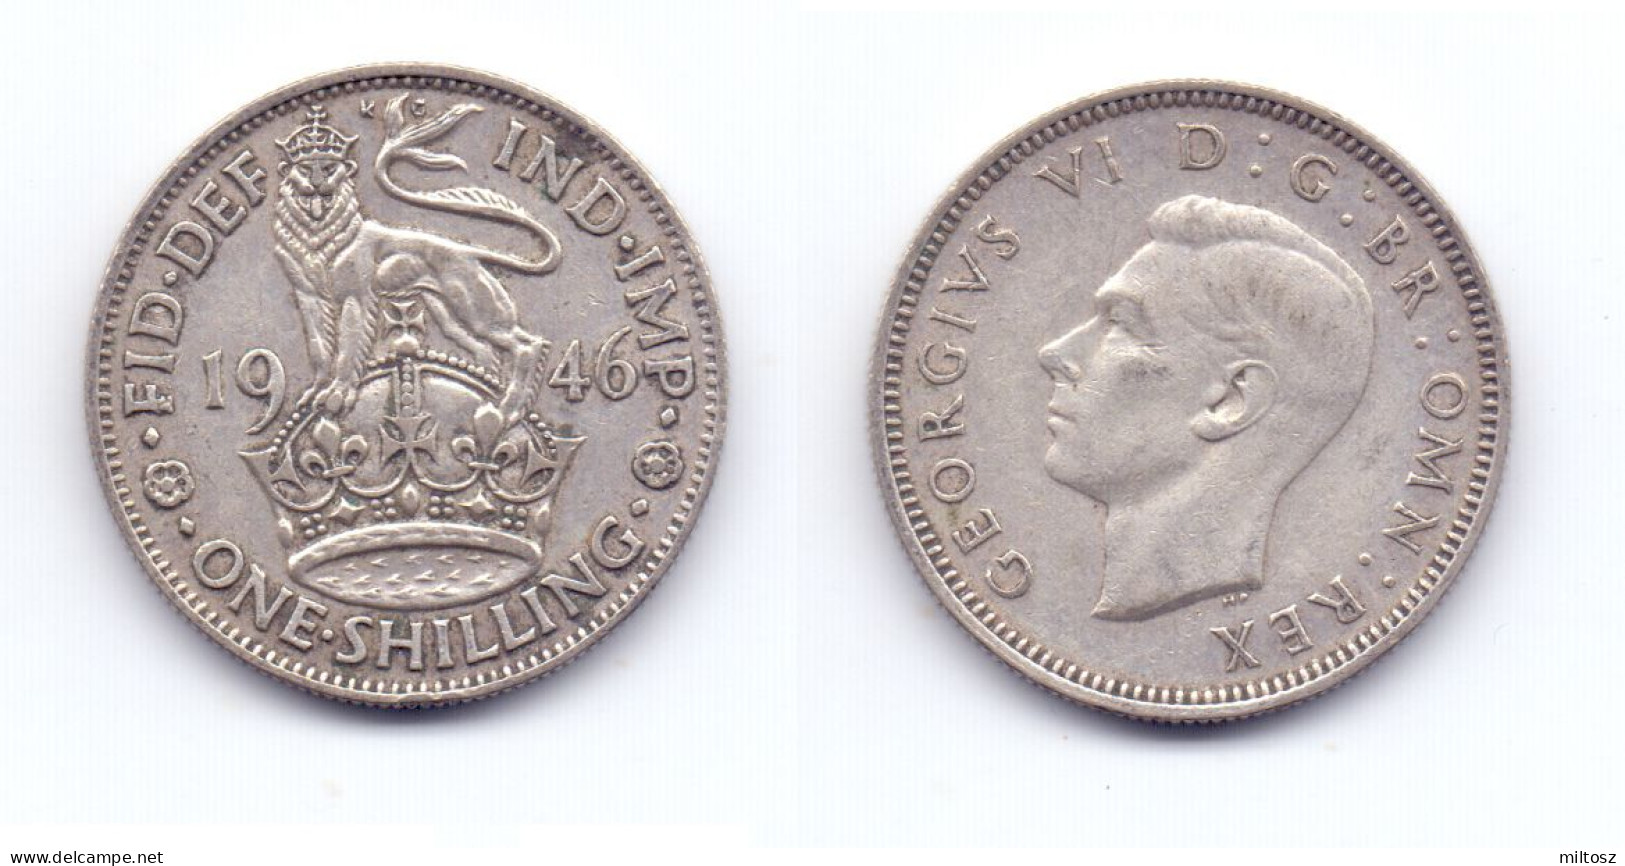 Great Britain 1 Shilling 1946 English Crest - I. 1 Shilling